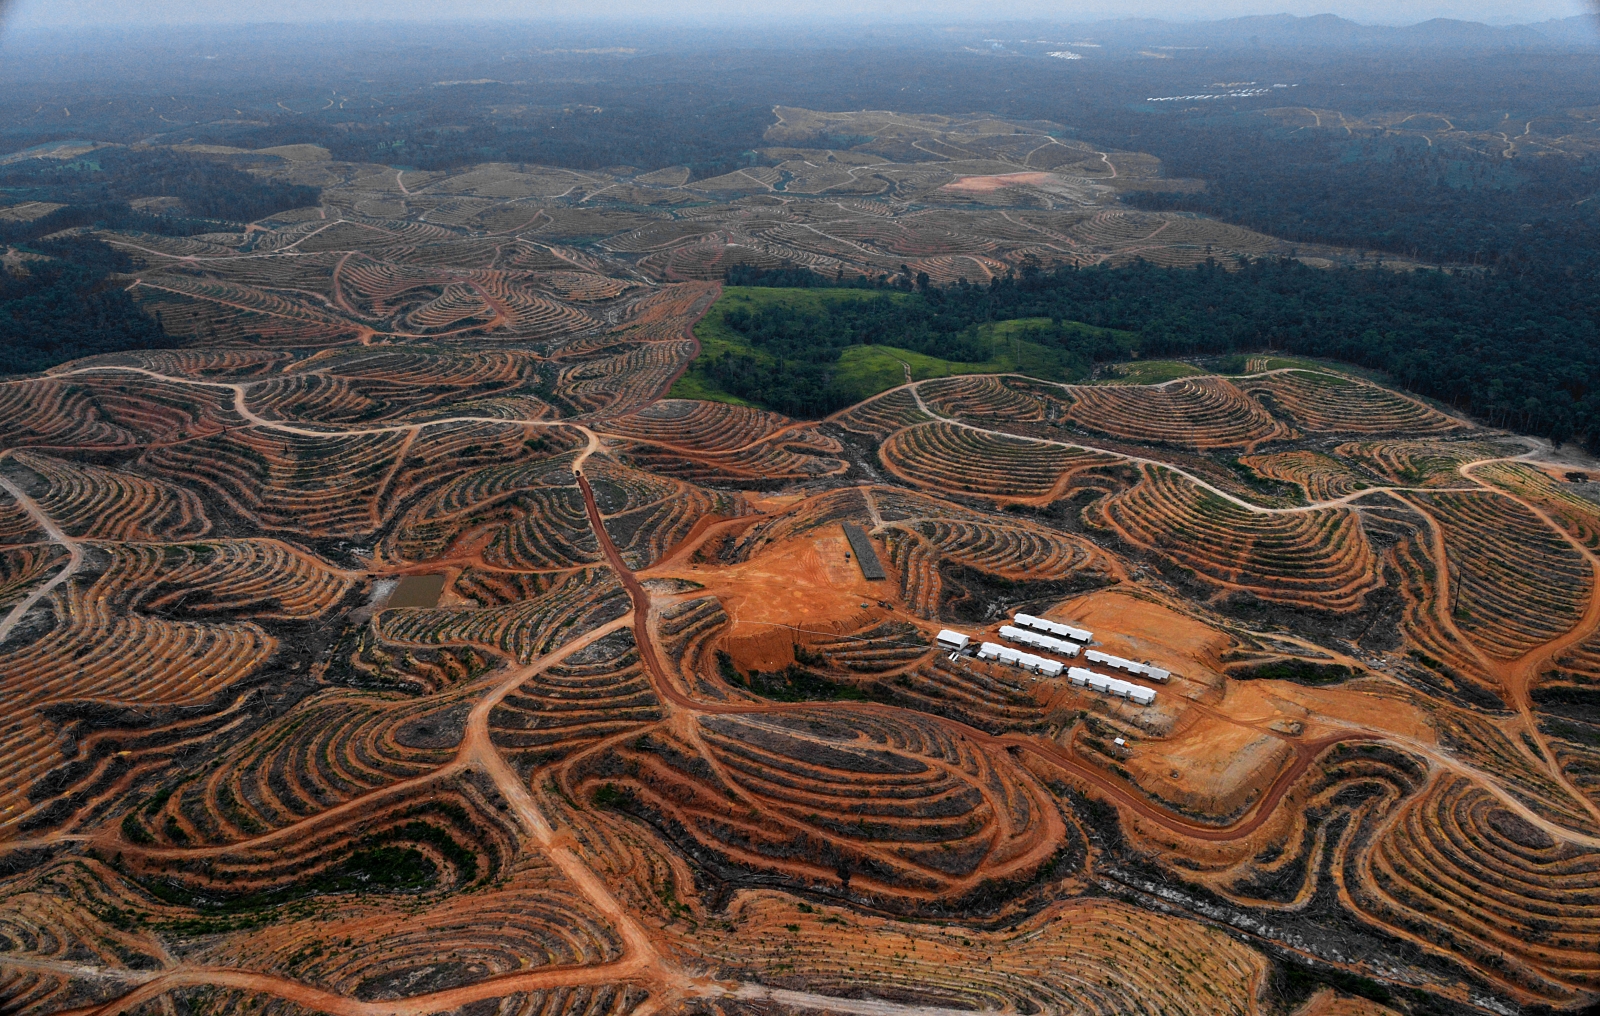 borneo deforestation case study